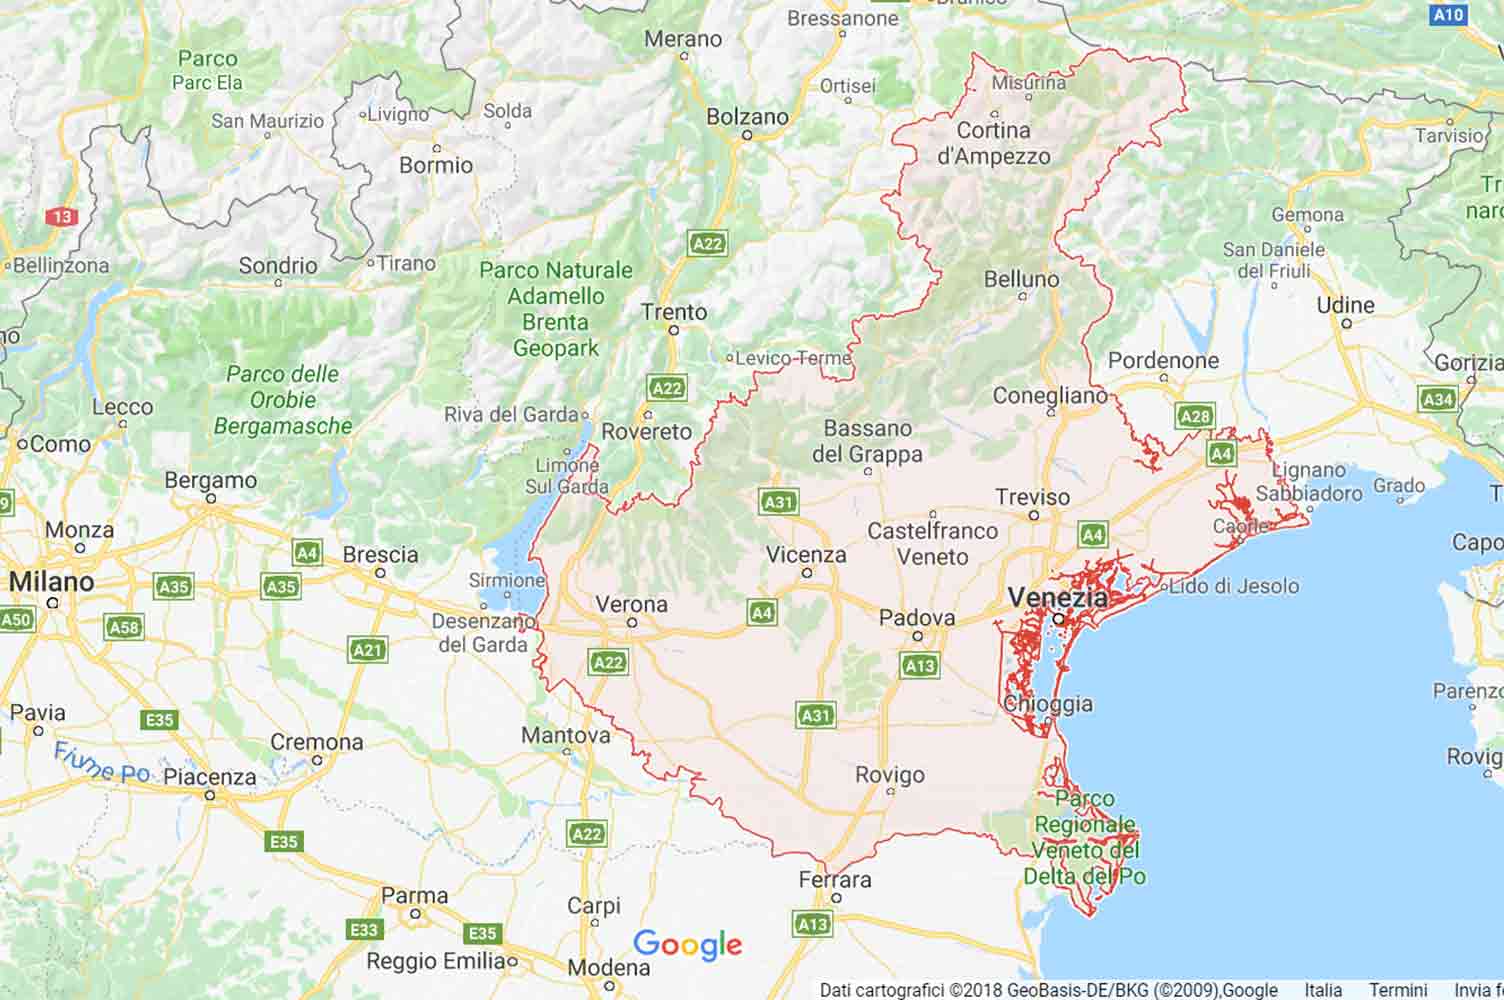 Veneto - Verona - Caprino Veronese Preventivi Veloci google maps